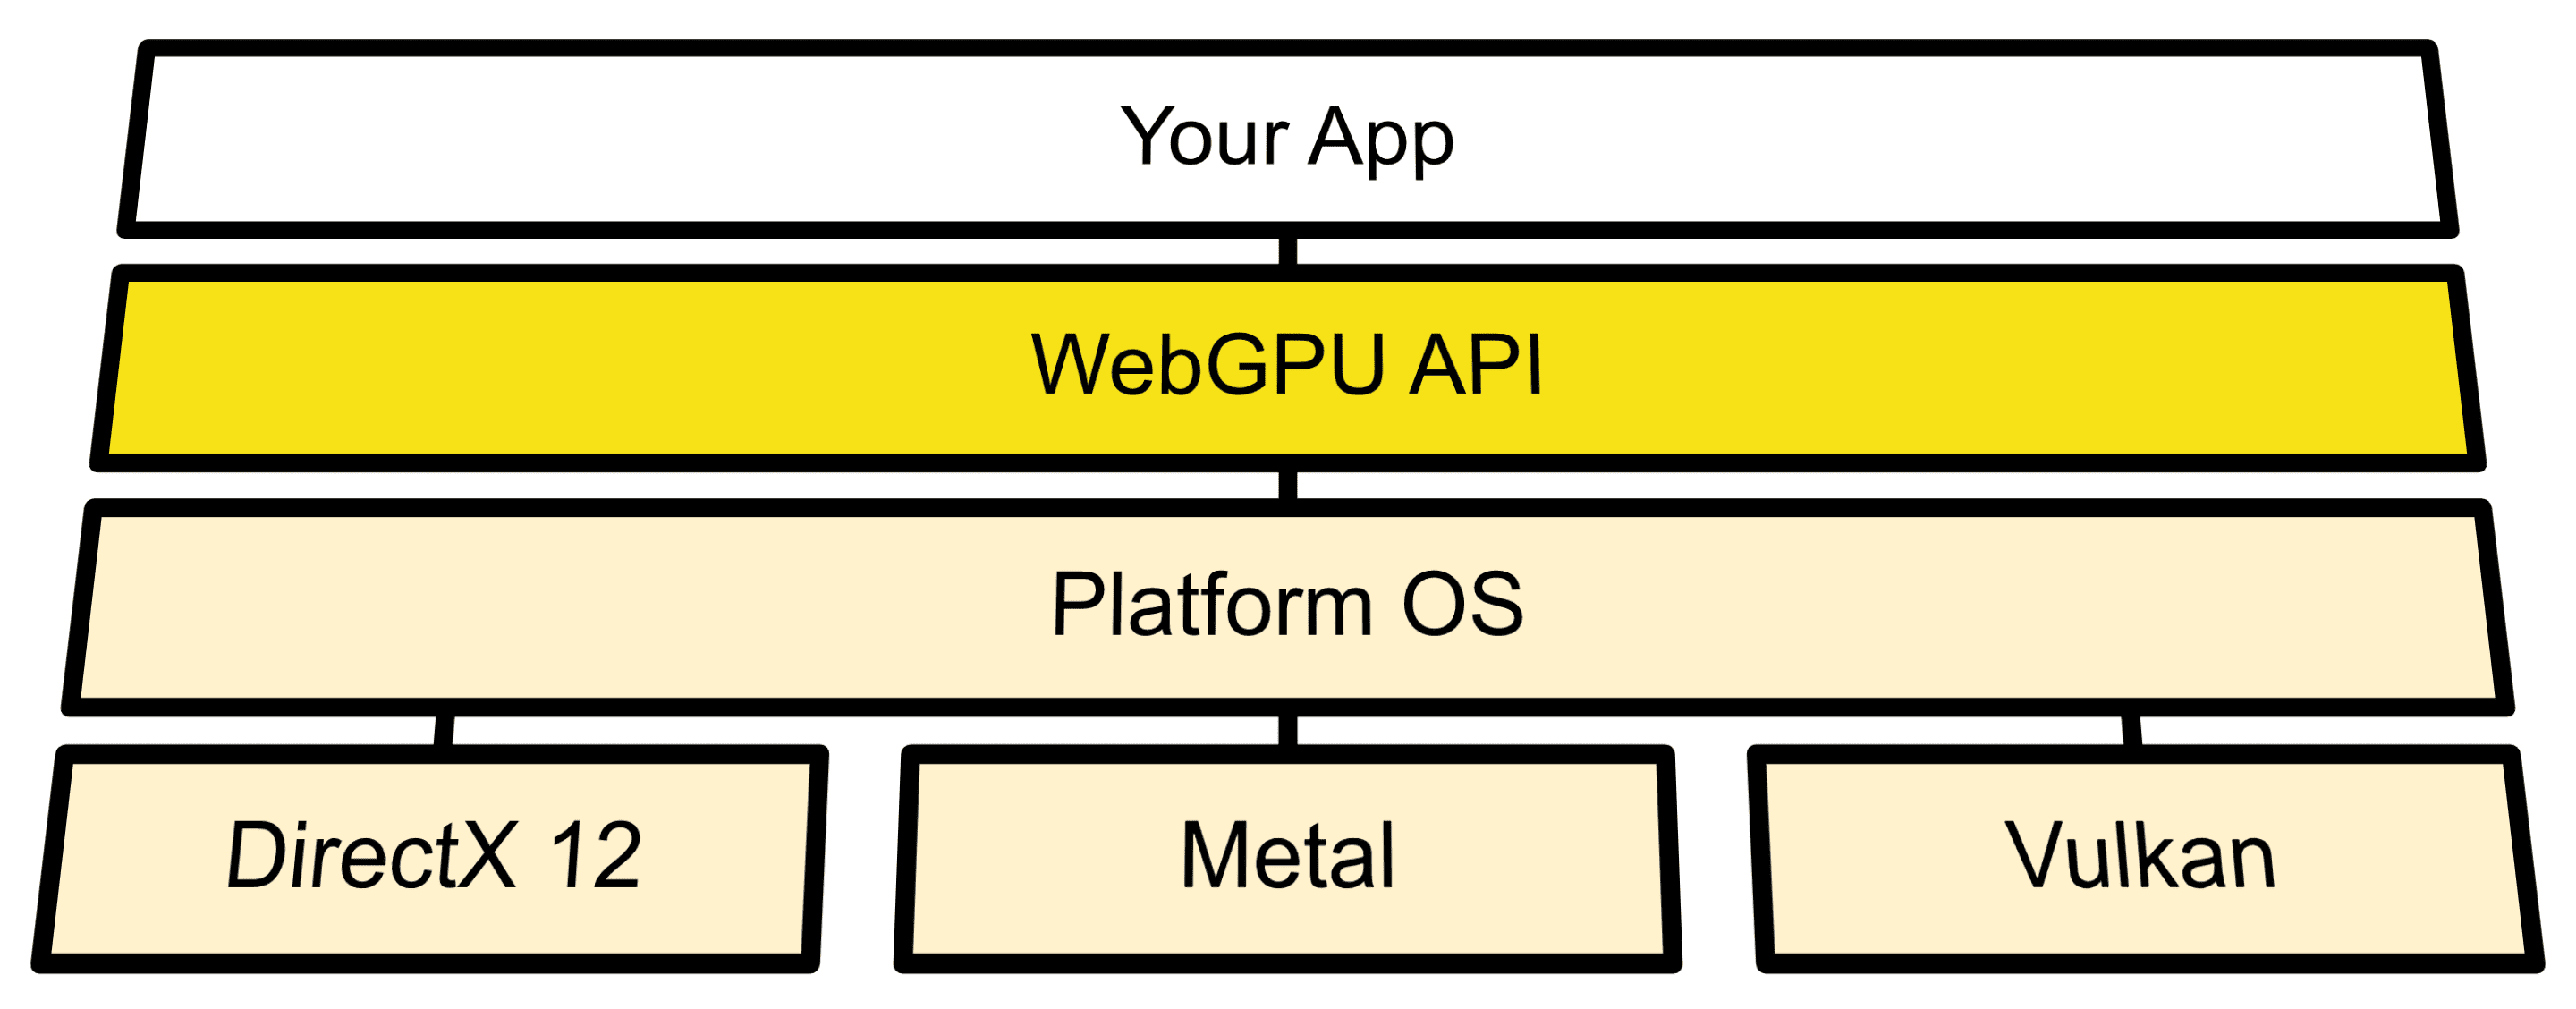 Architectuurdiagram dat de WebGPU-verbinding toont tussen OS-API's en Direct3D 12, Metal en Vulkan.